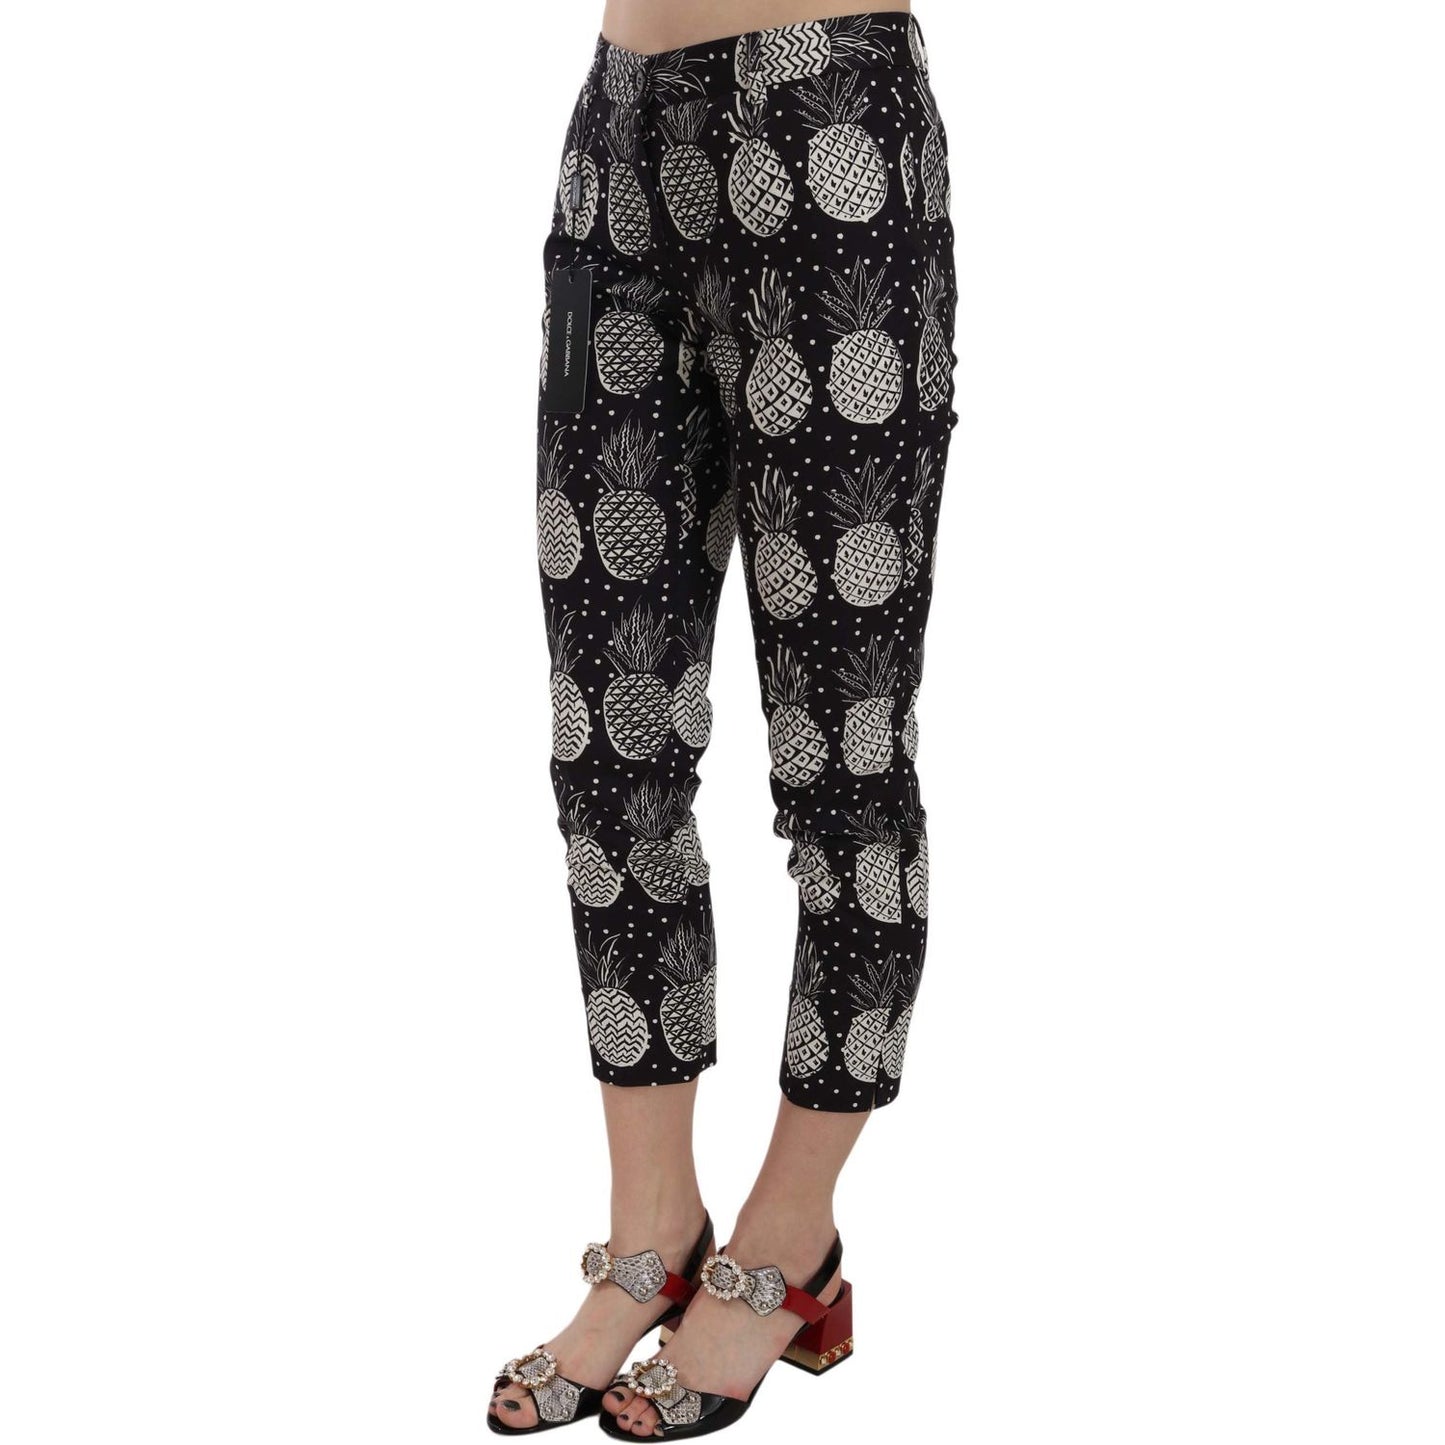 Dolce & Gabbana Chic Black Pineapple Print Skinny Capri Pants Jeans & Pants black-pineapple-print-skinny-capri-pants IMG_9614-scaled-f6ad0713-1d0.jpg